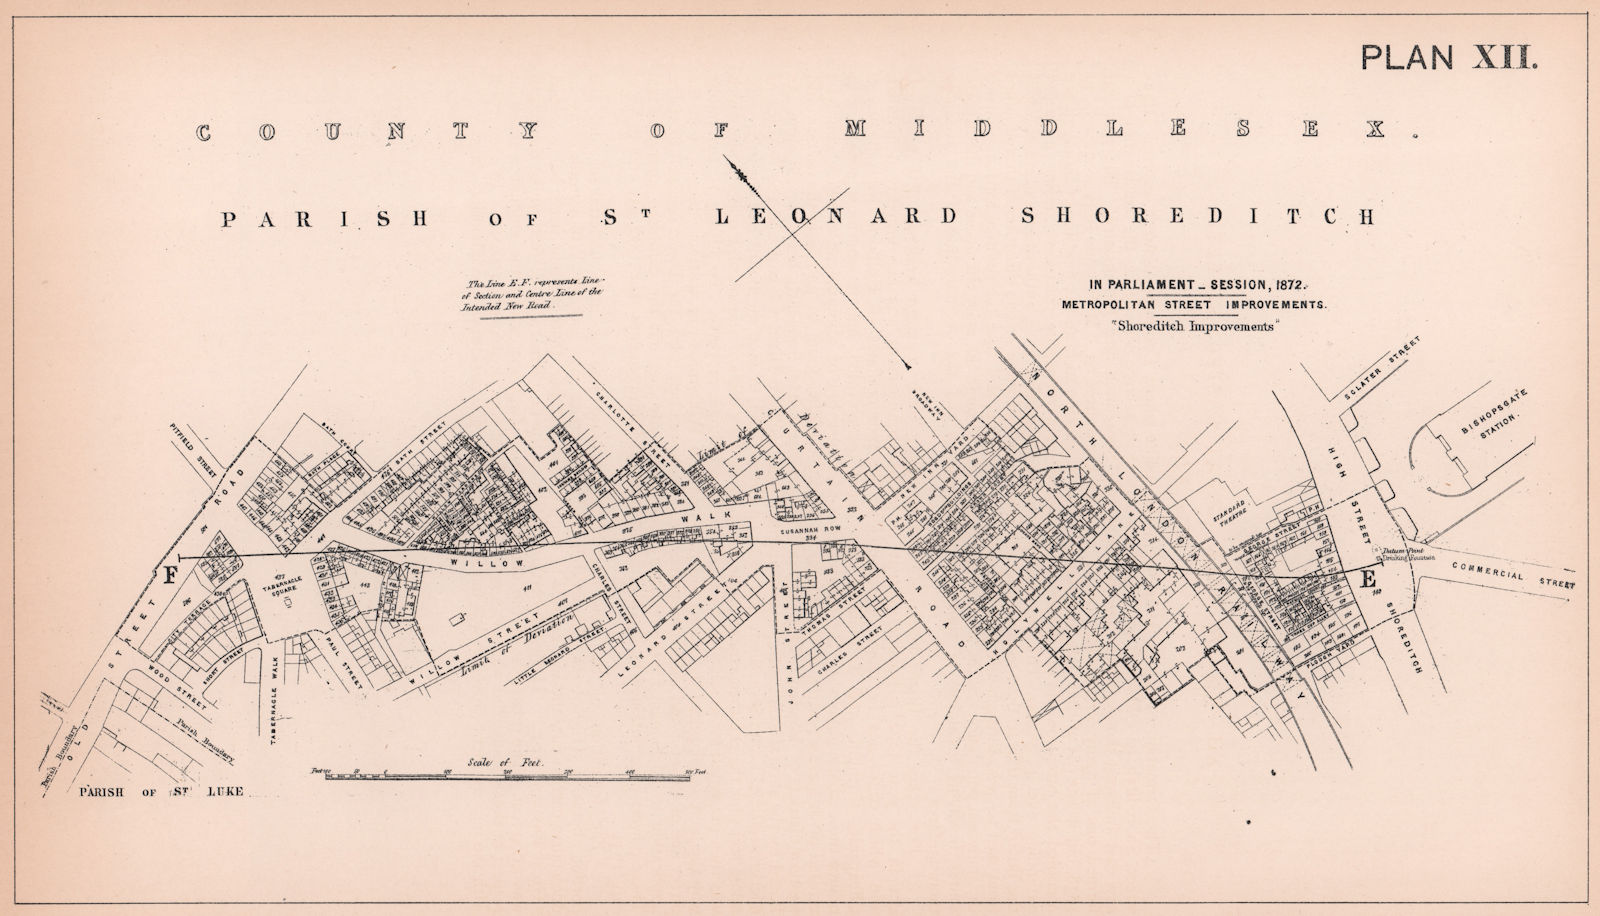 1872 Great Eastern Street development. Shoreditch High Street - Old St 1898 map